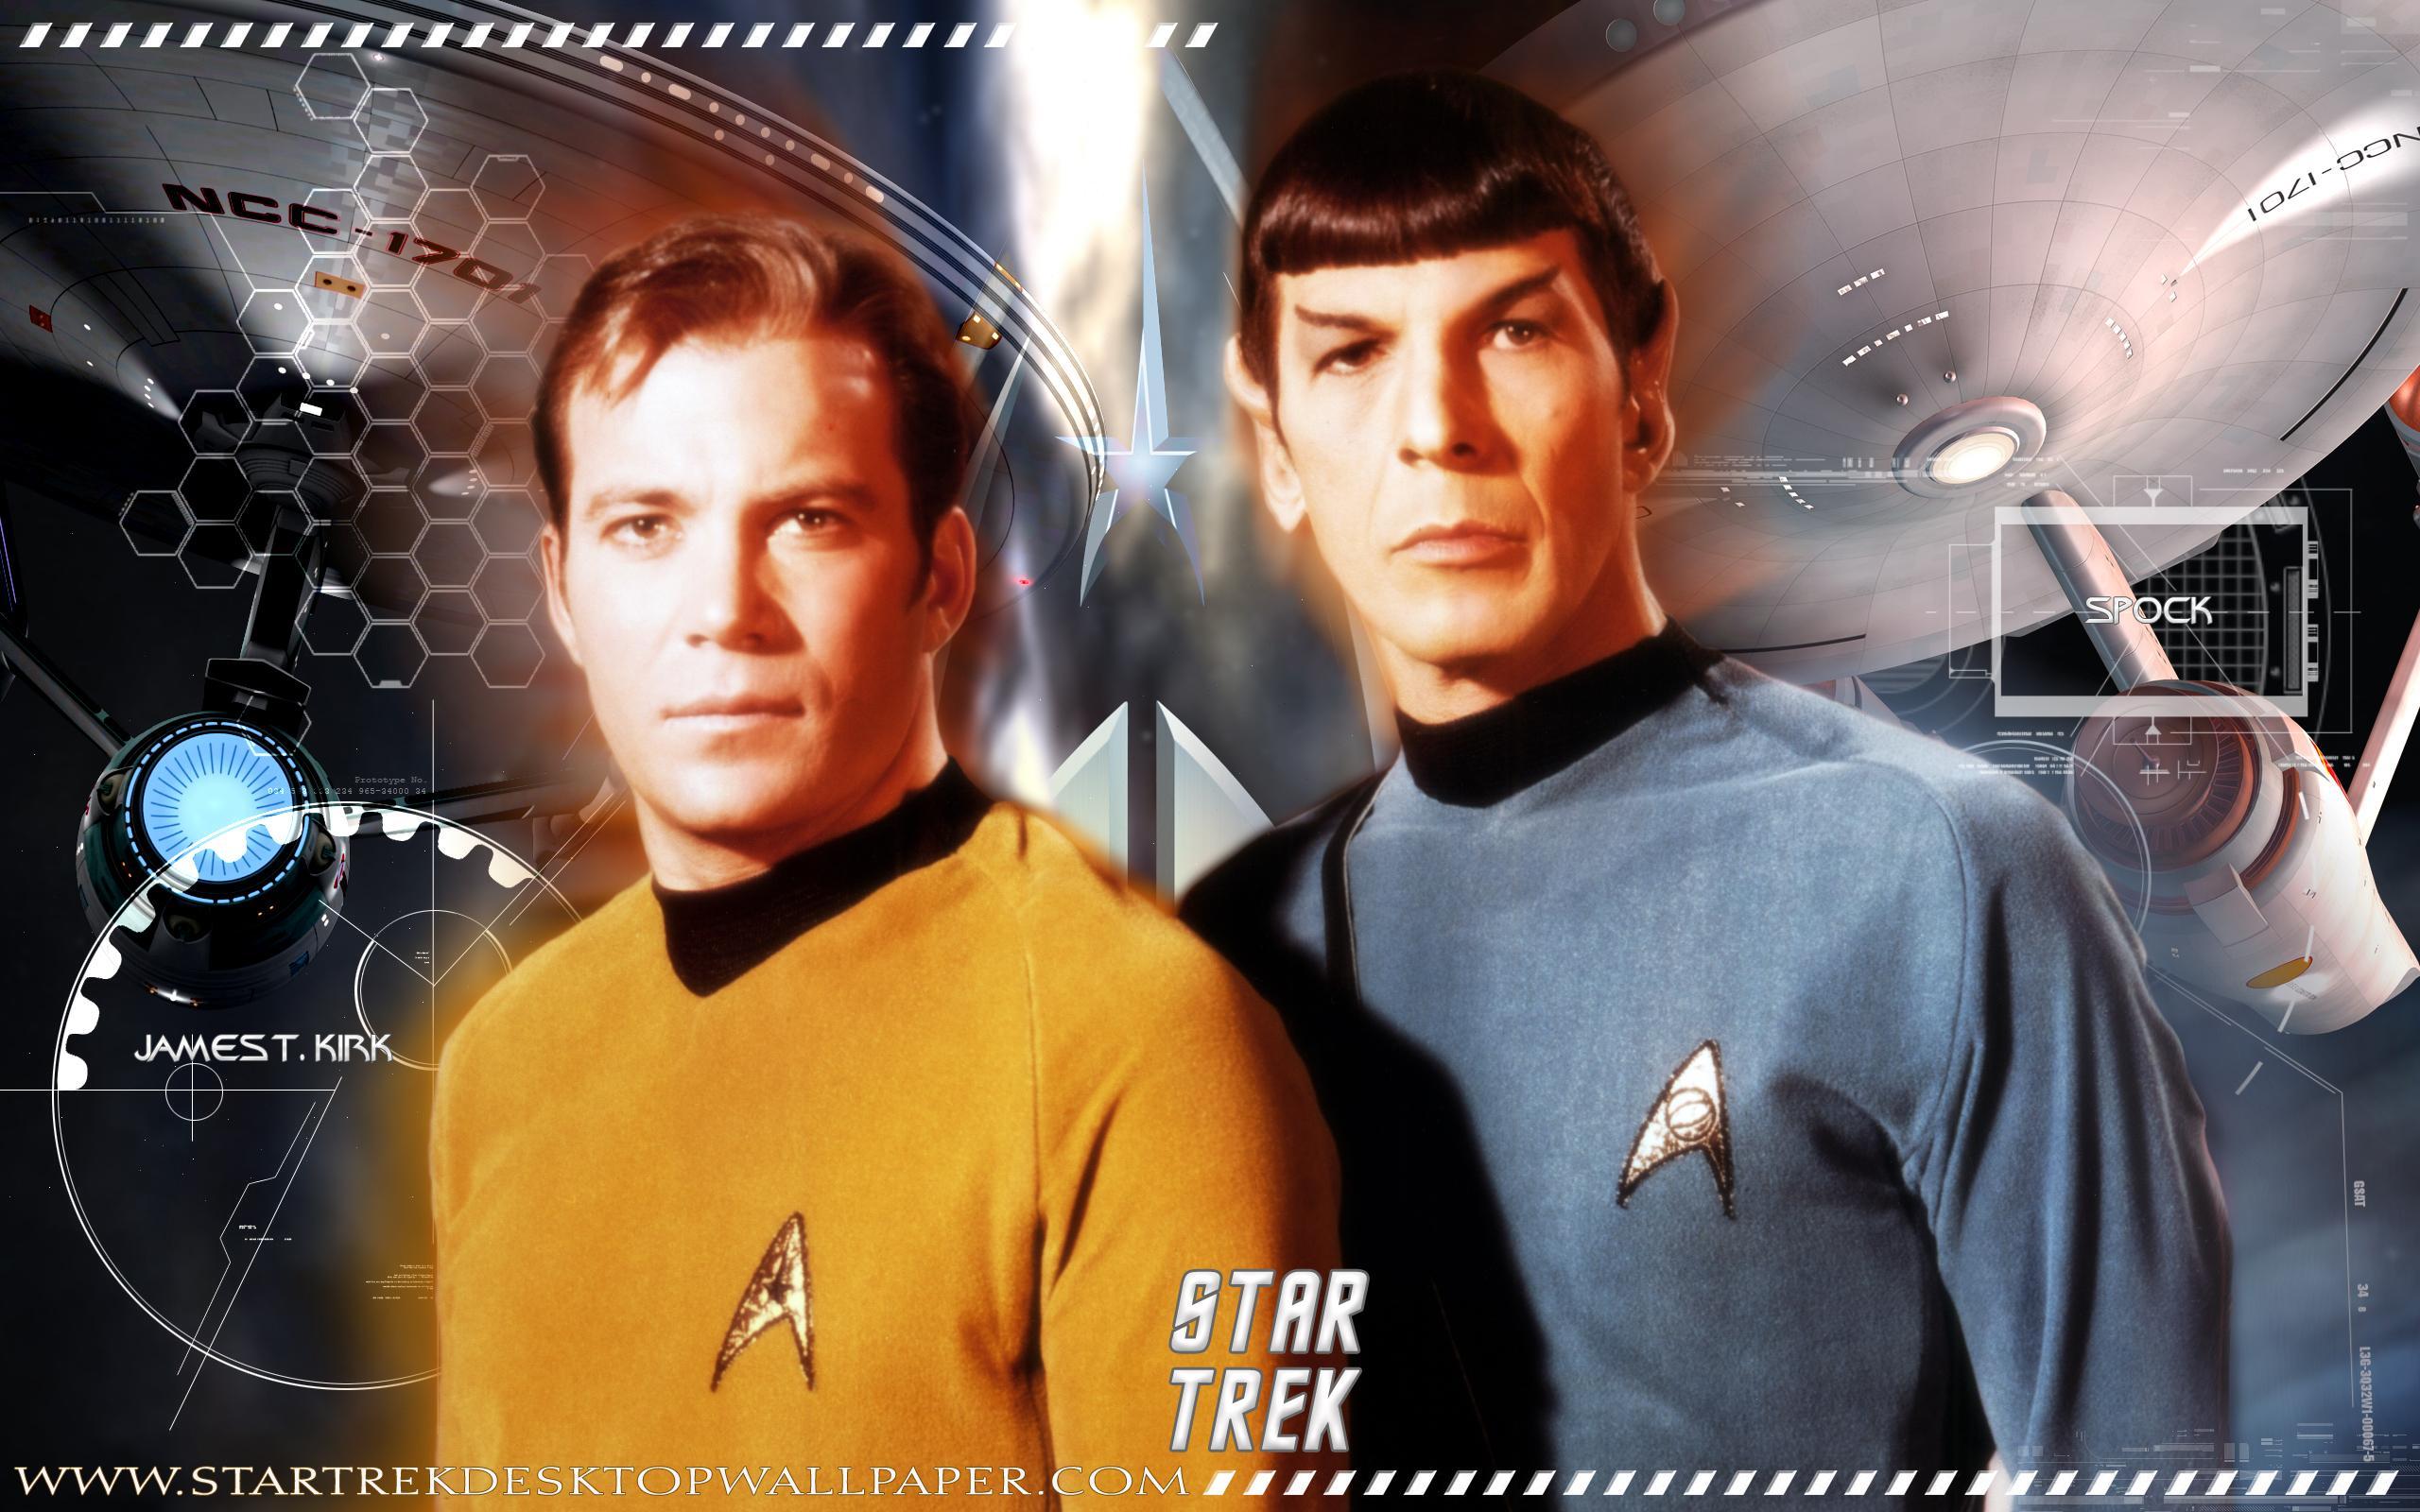 Star Trek: The Original Series Wallpaper and Background Image